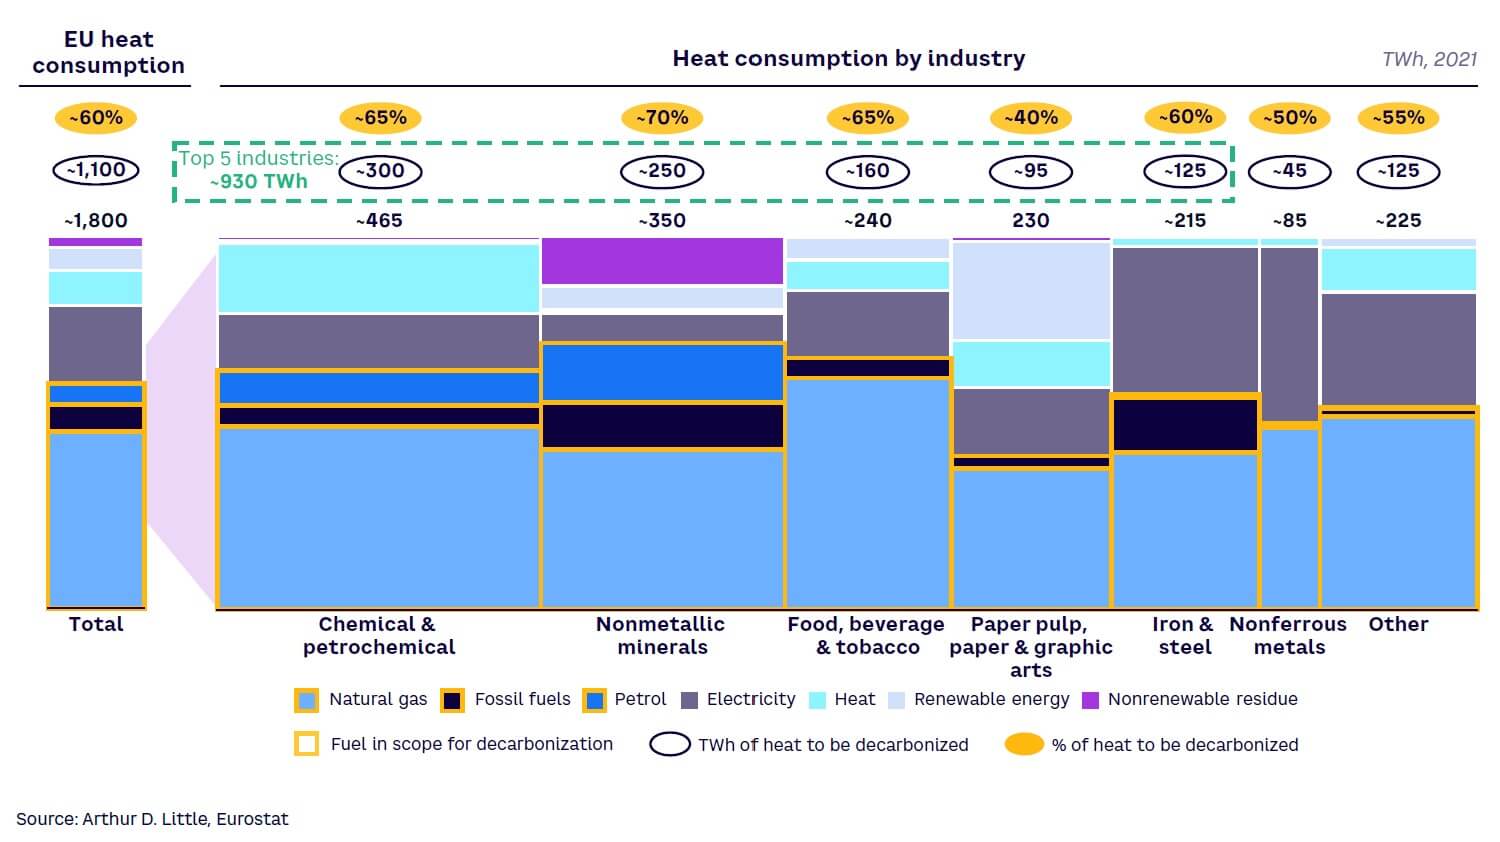 Figure 2. EU heat consumption by industry